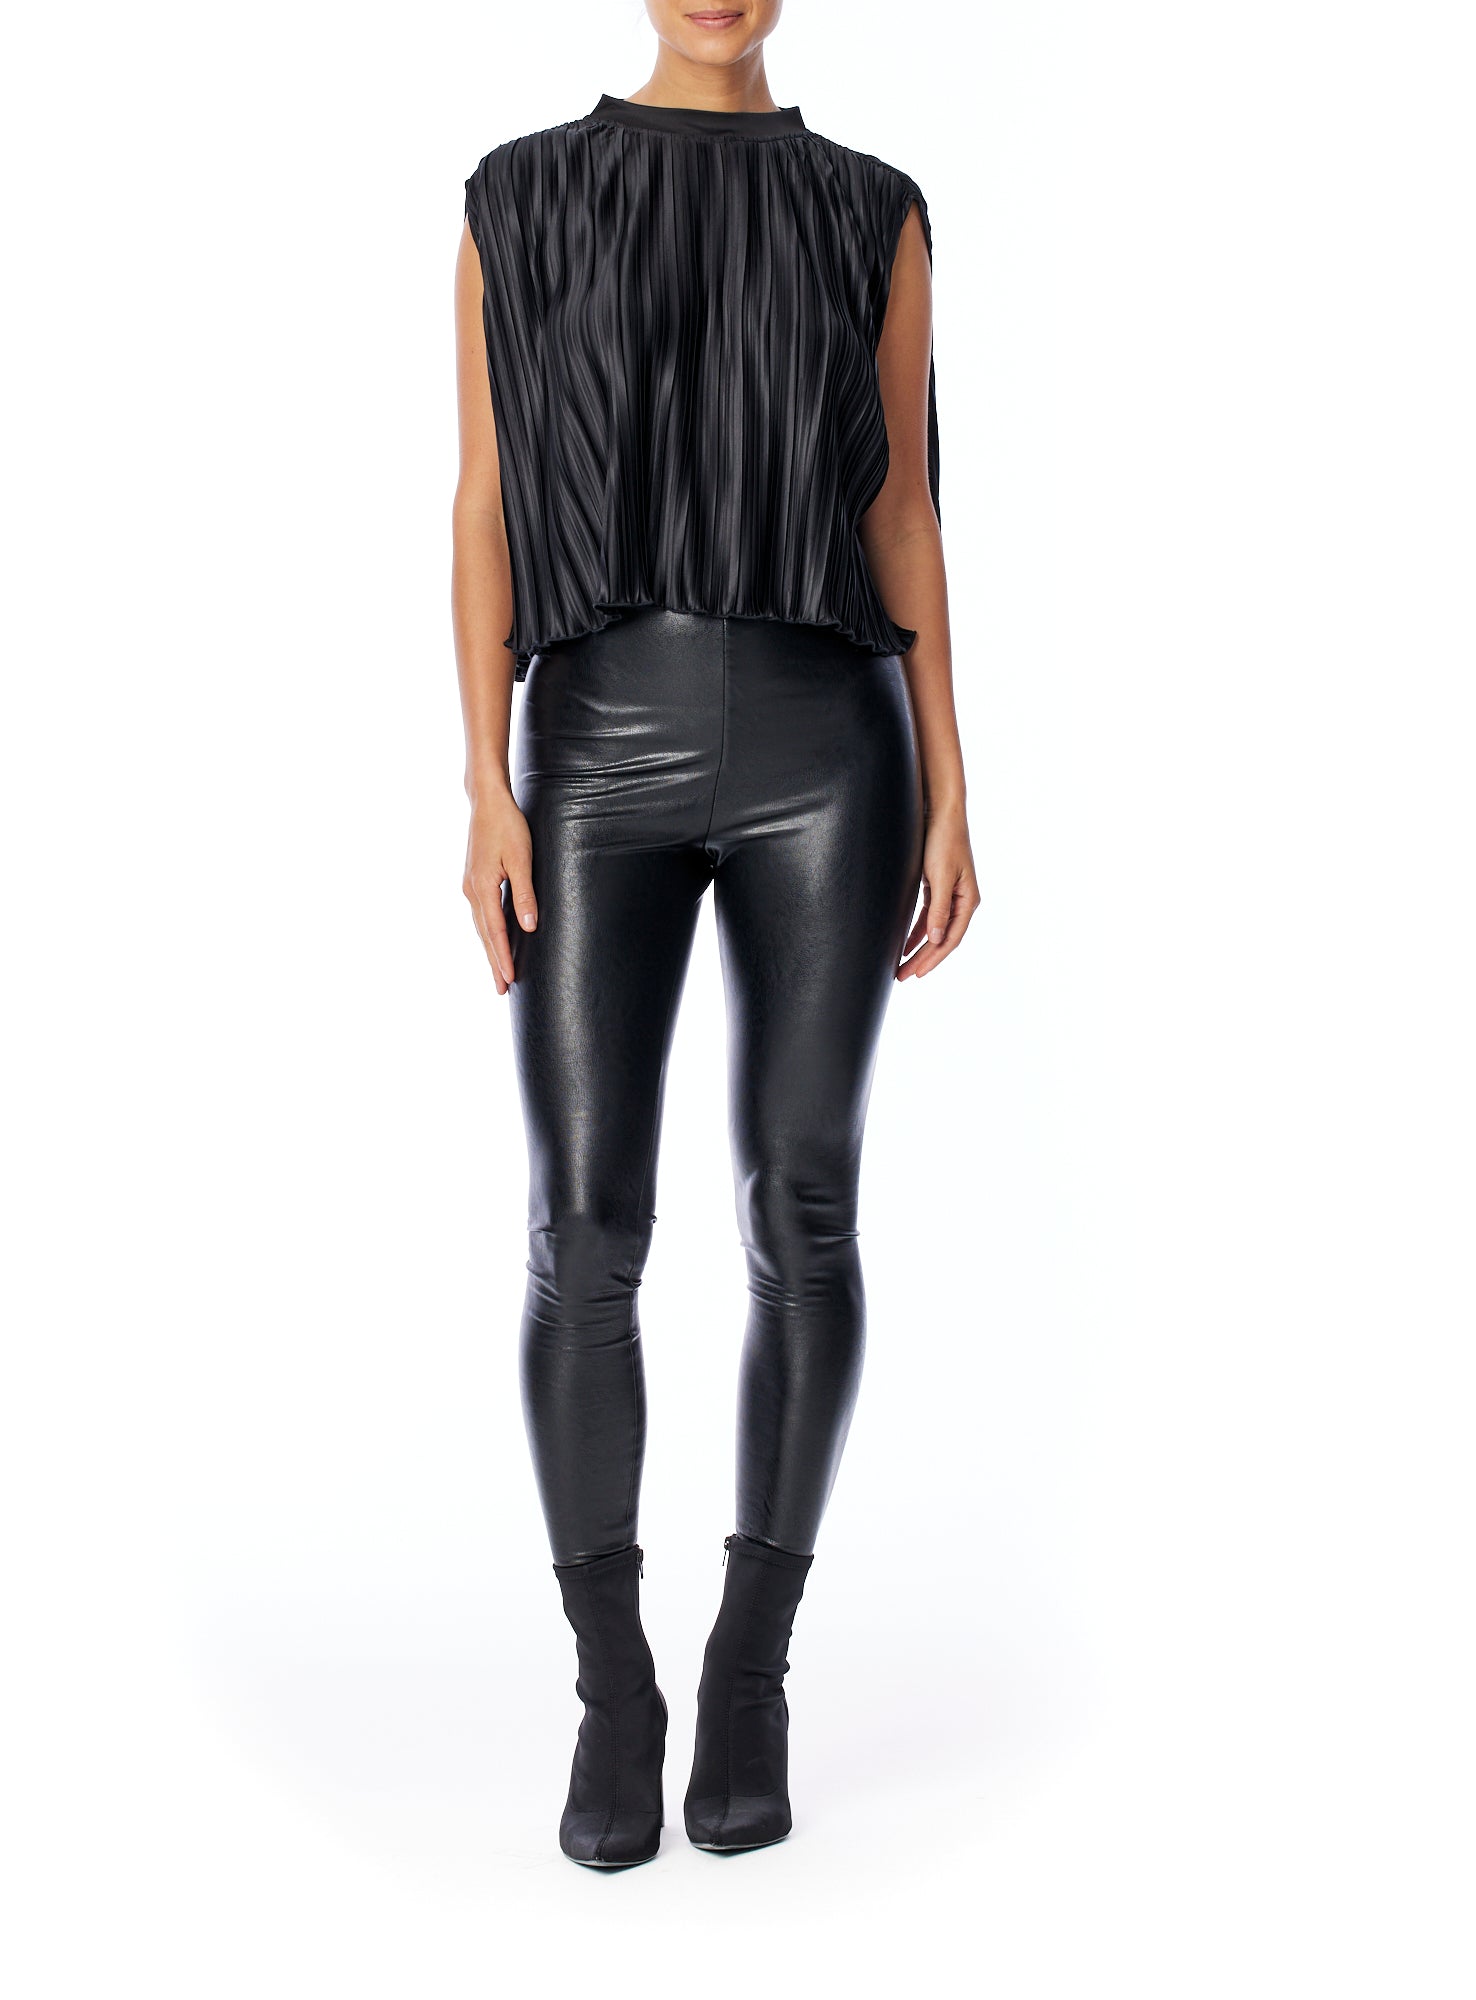 Black faux leather legging - front view